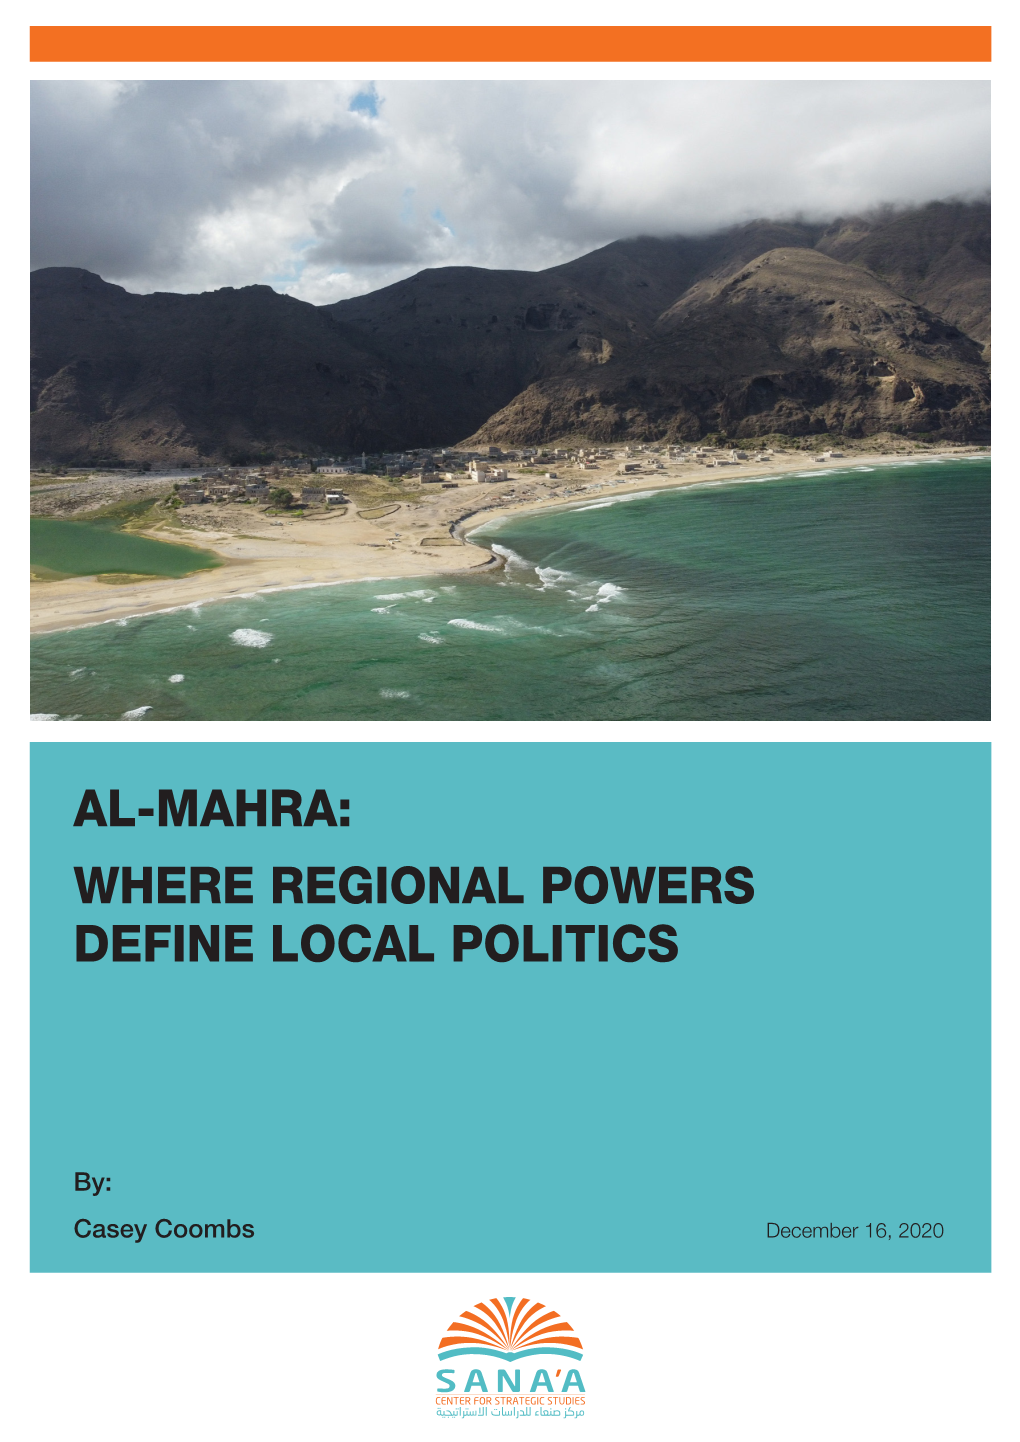 Al-Mahra: Where Regional Powers Define Local Politics